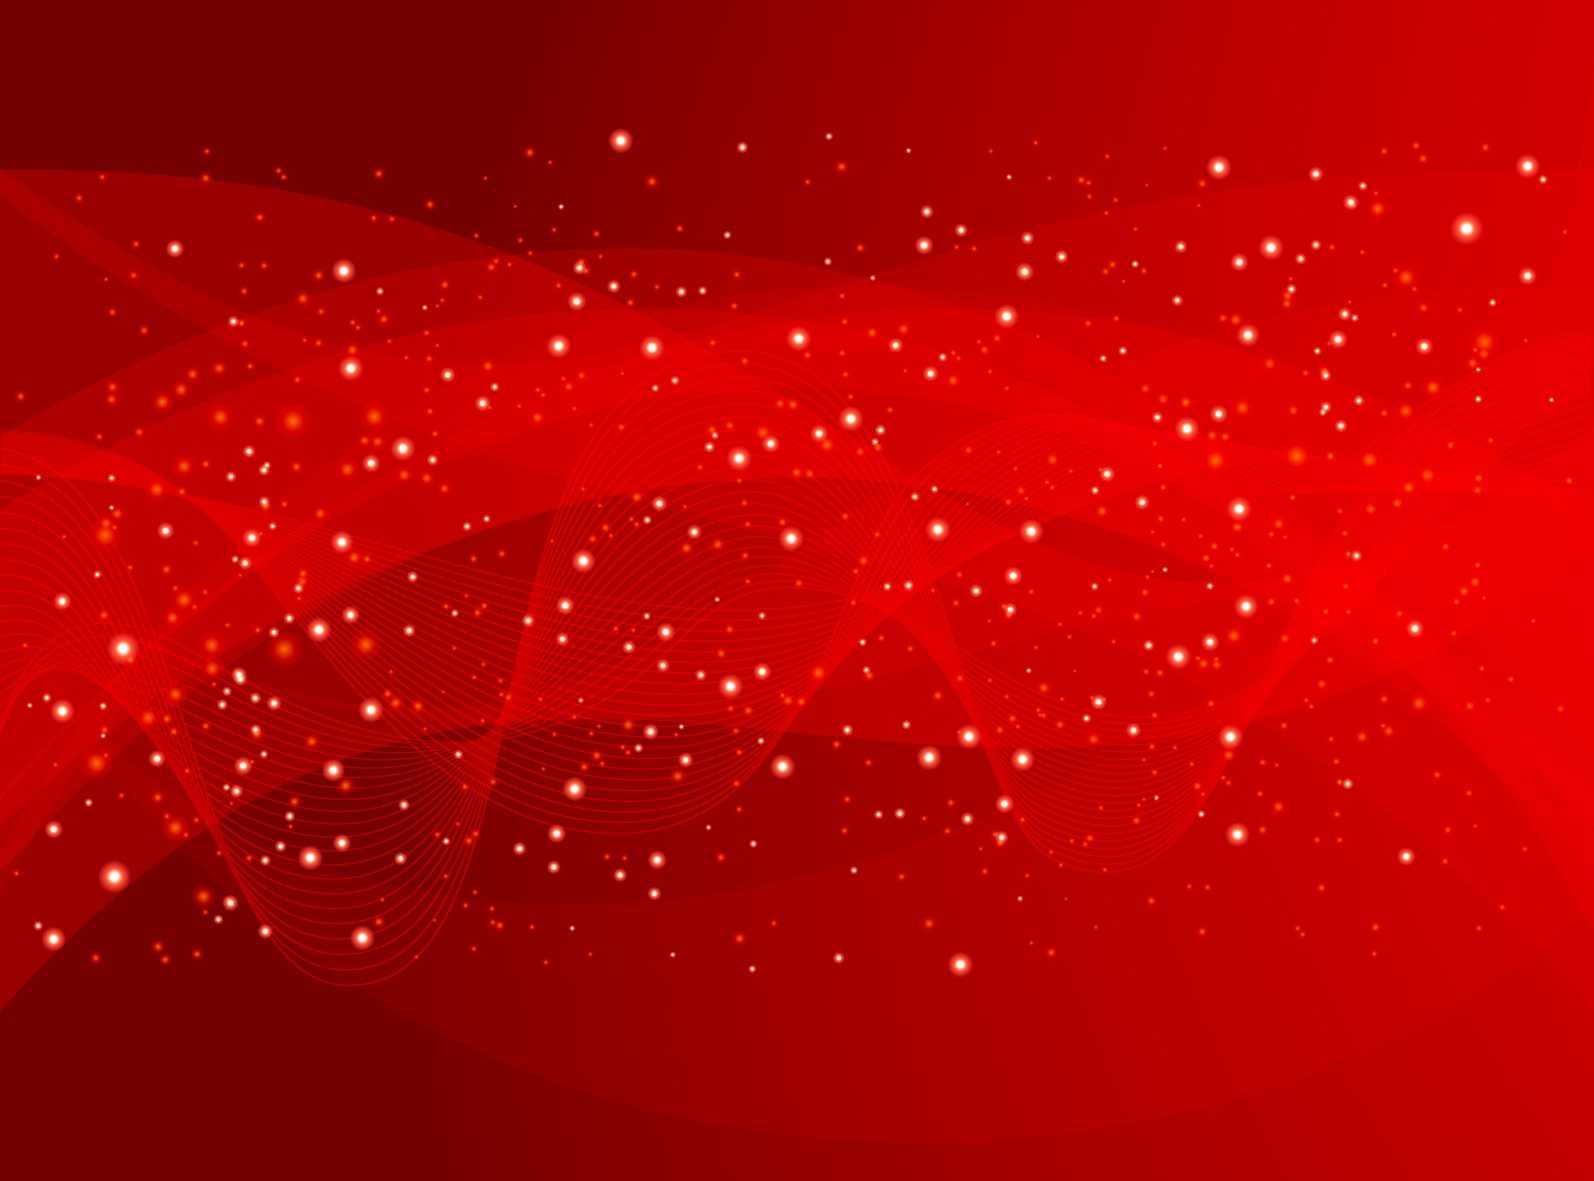 Cool Red Wallpapers HD Free download - PixelsTalk.Net